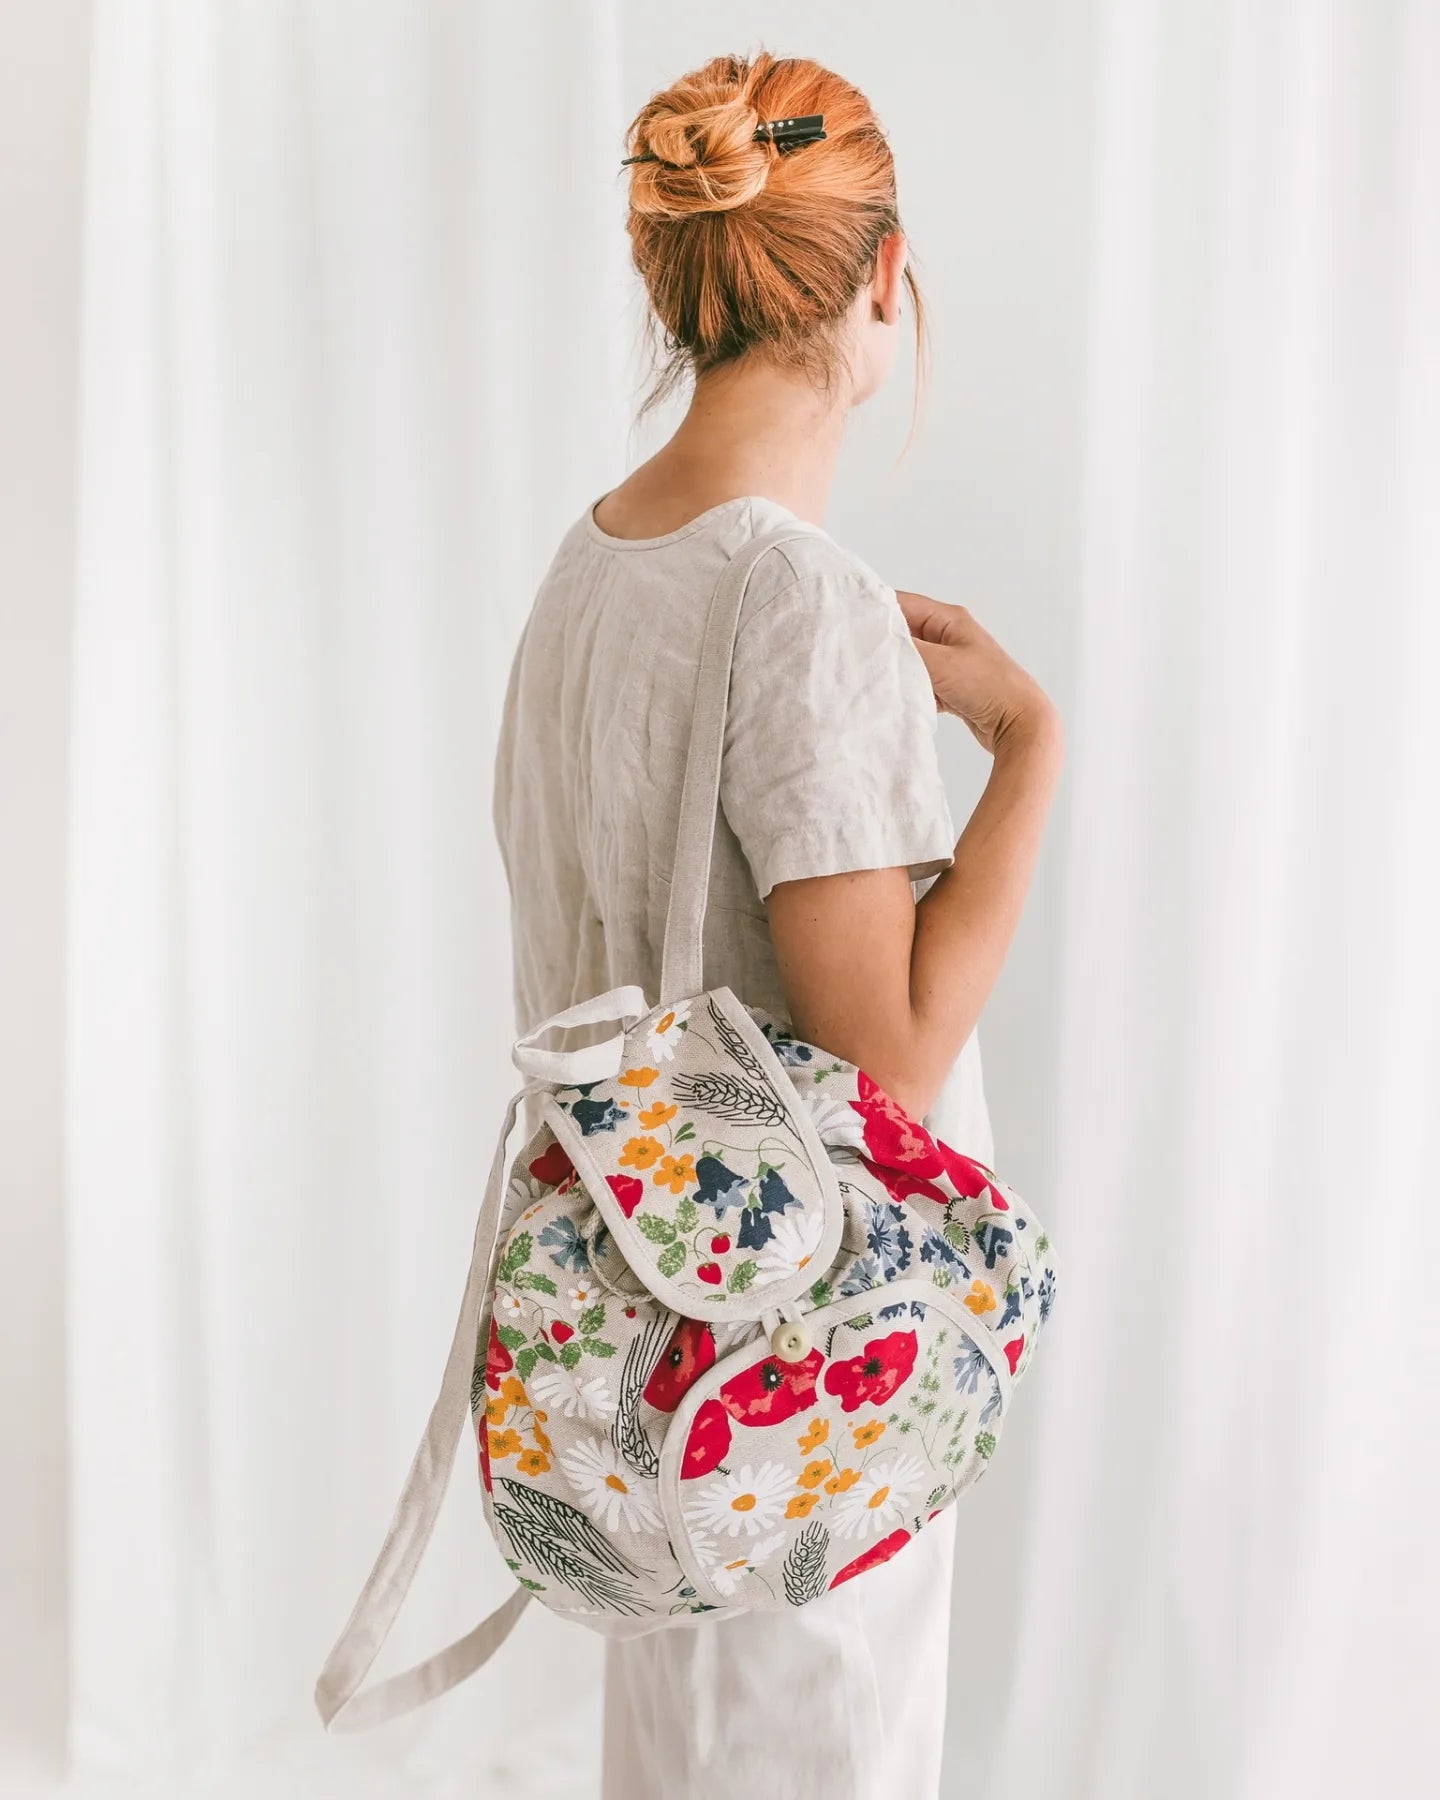 Linen Backpack with Wild Flowers Women’s Boho Rucksack by SaVa Seasons